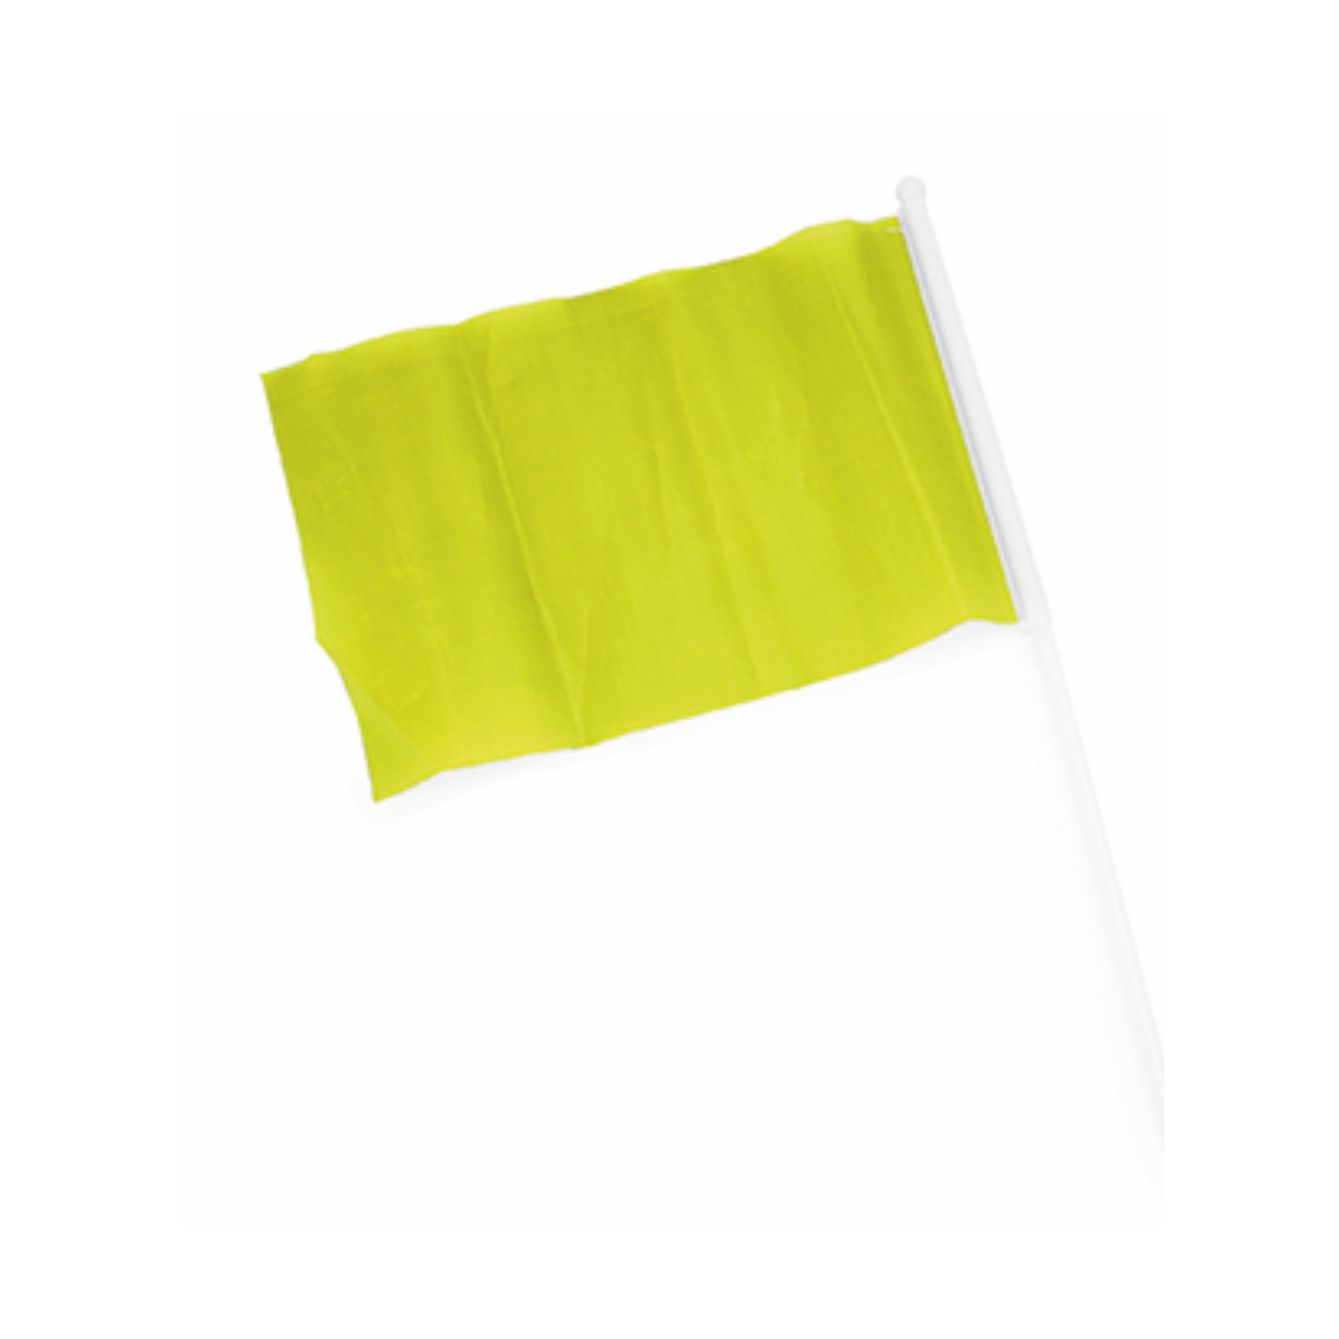 3656-flaggy-flaggy-bandierina-in-poliestere-giallo.jpg